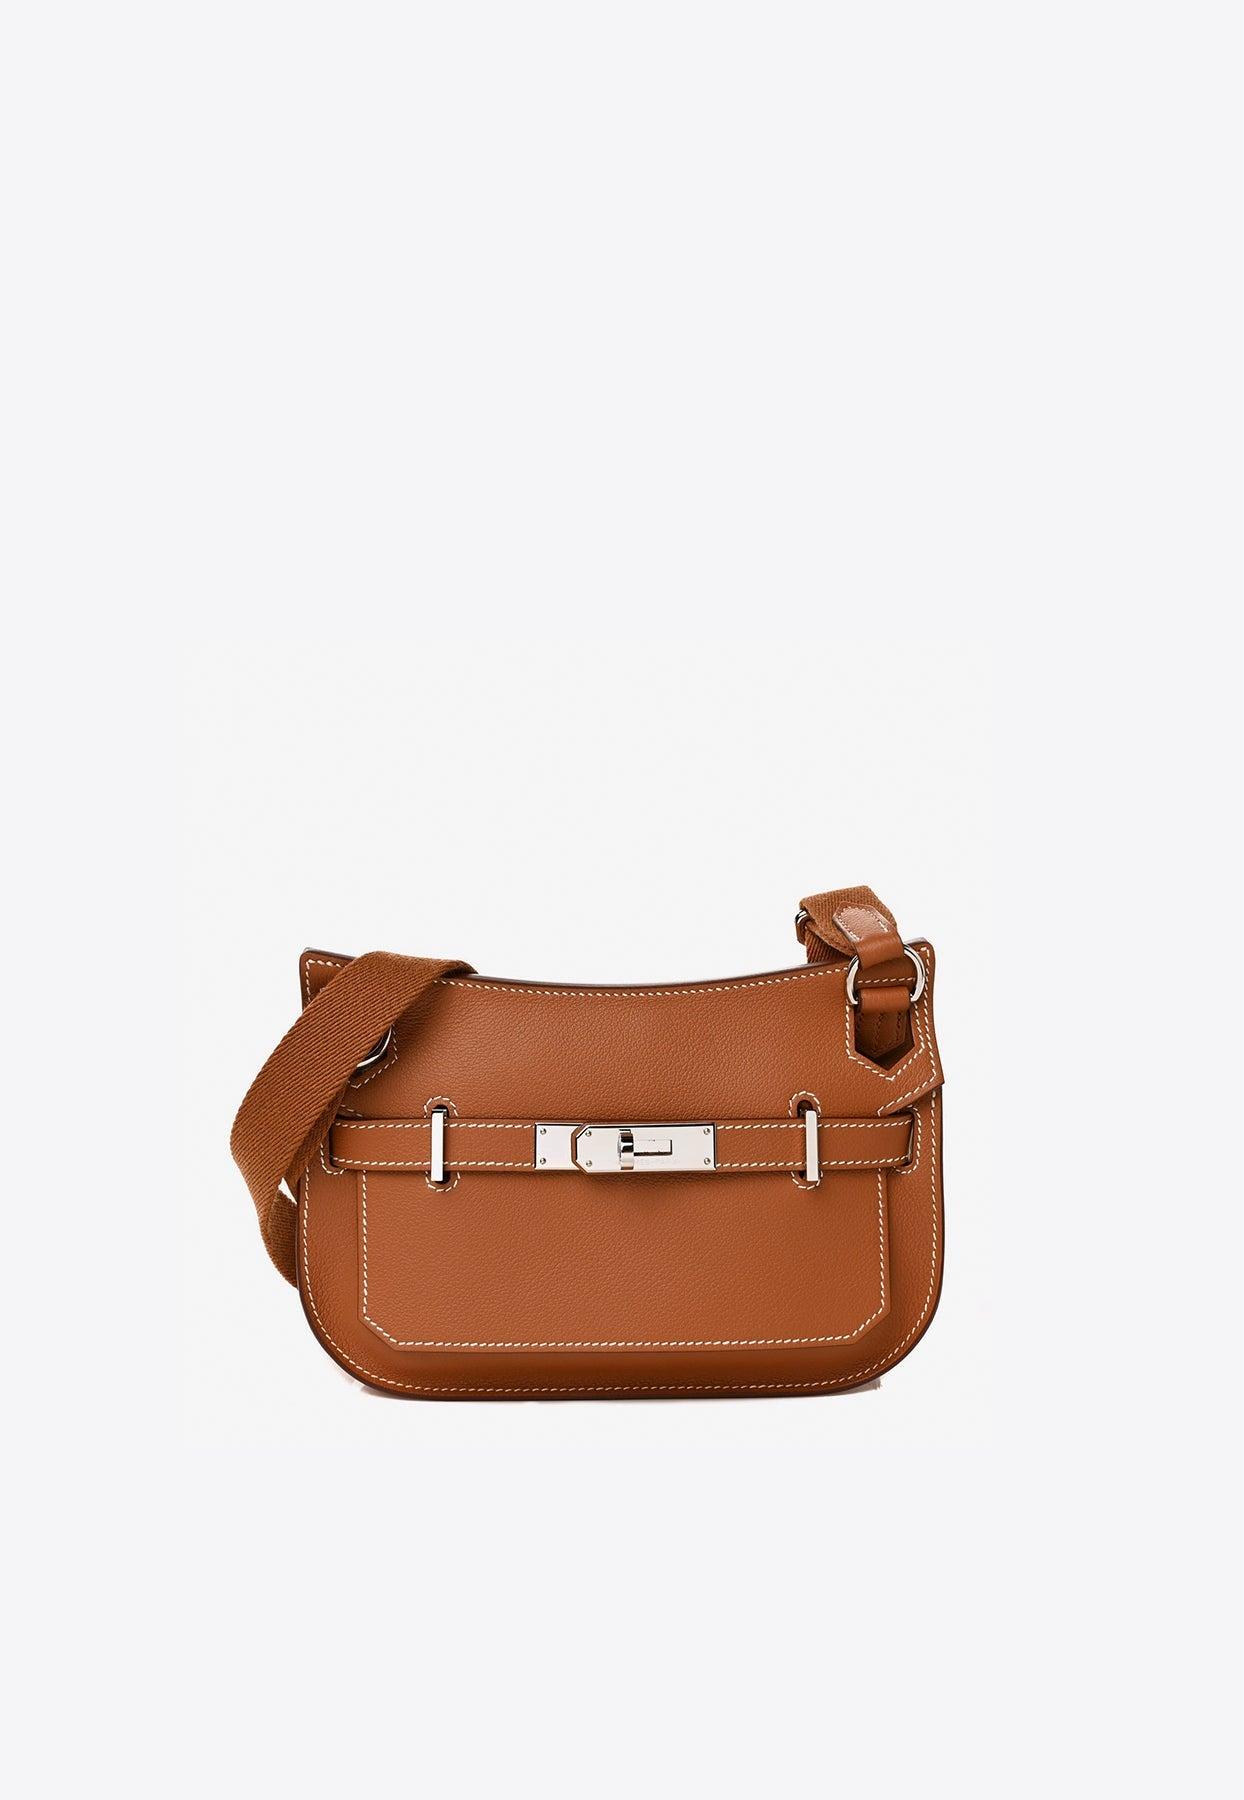 New Favorite Mini Hermes Bag: The Mini Jypsiere, Handbags and Accessories